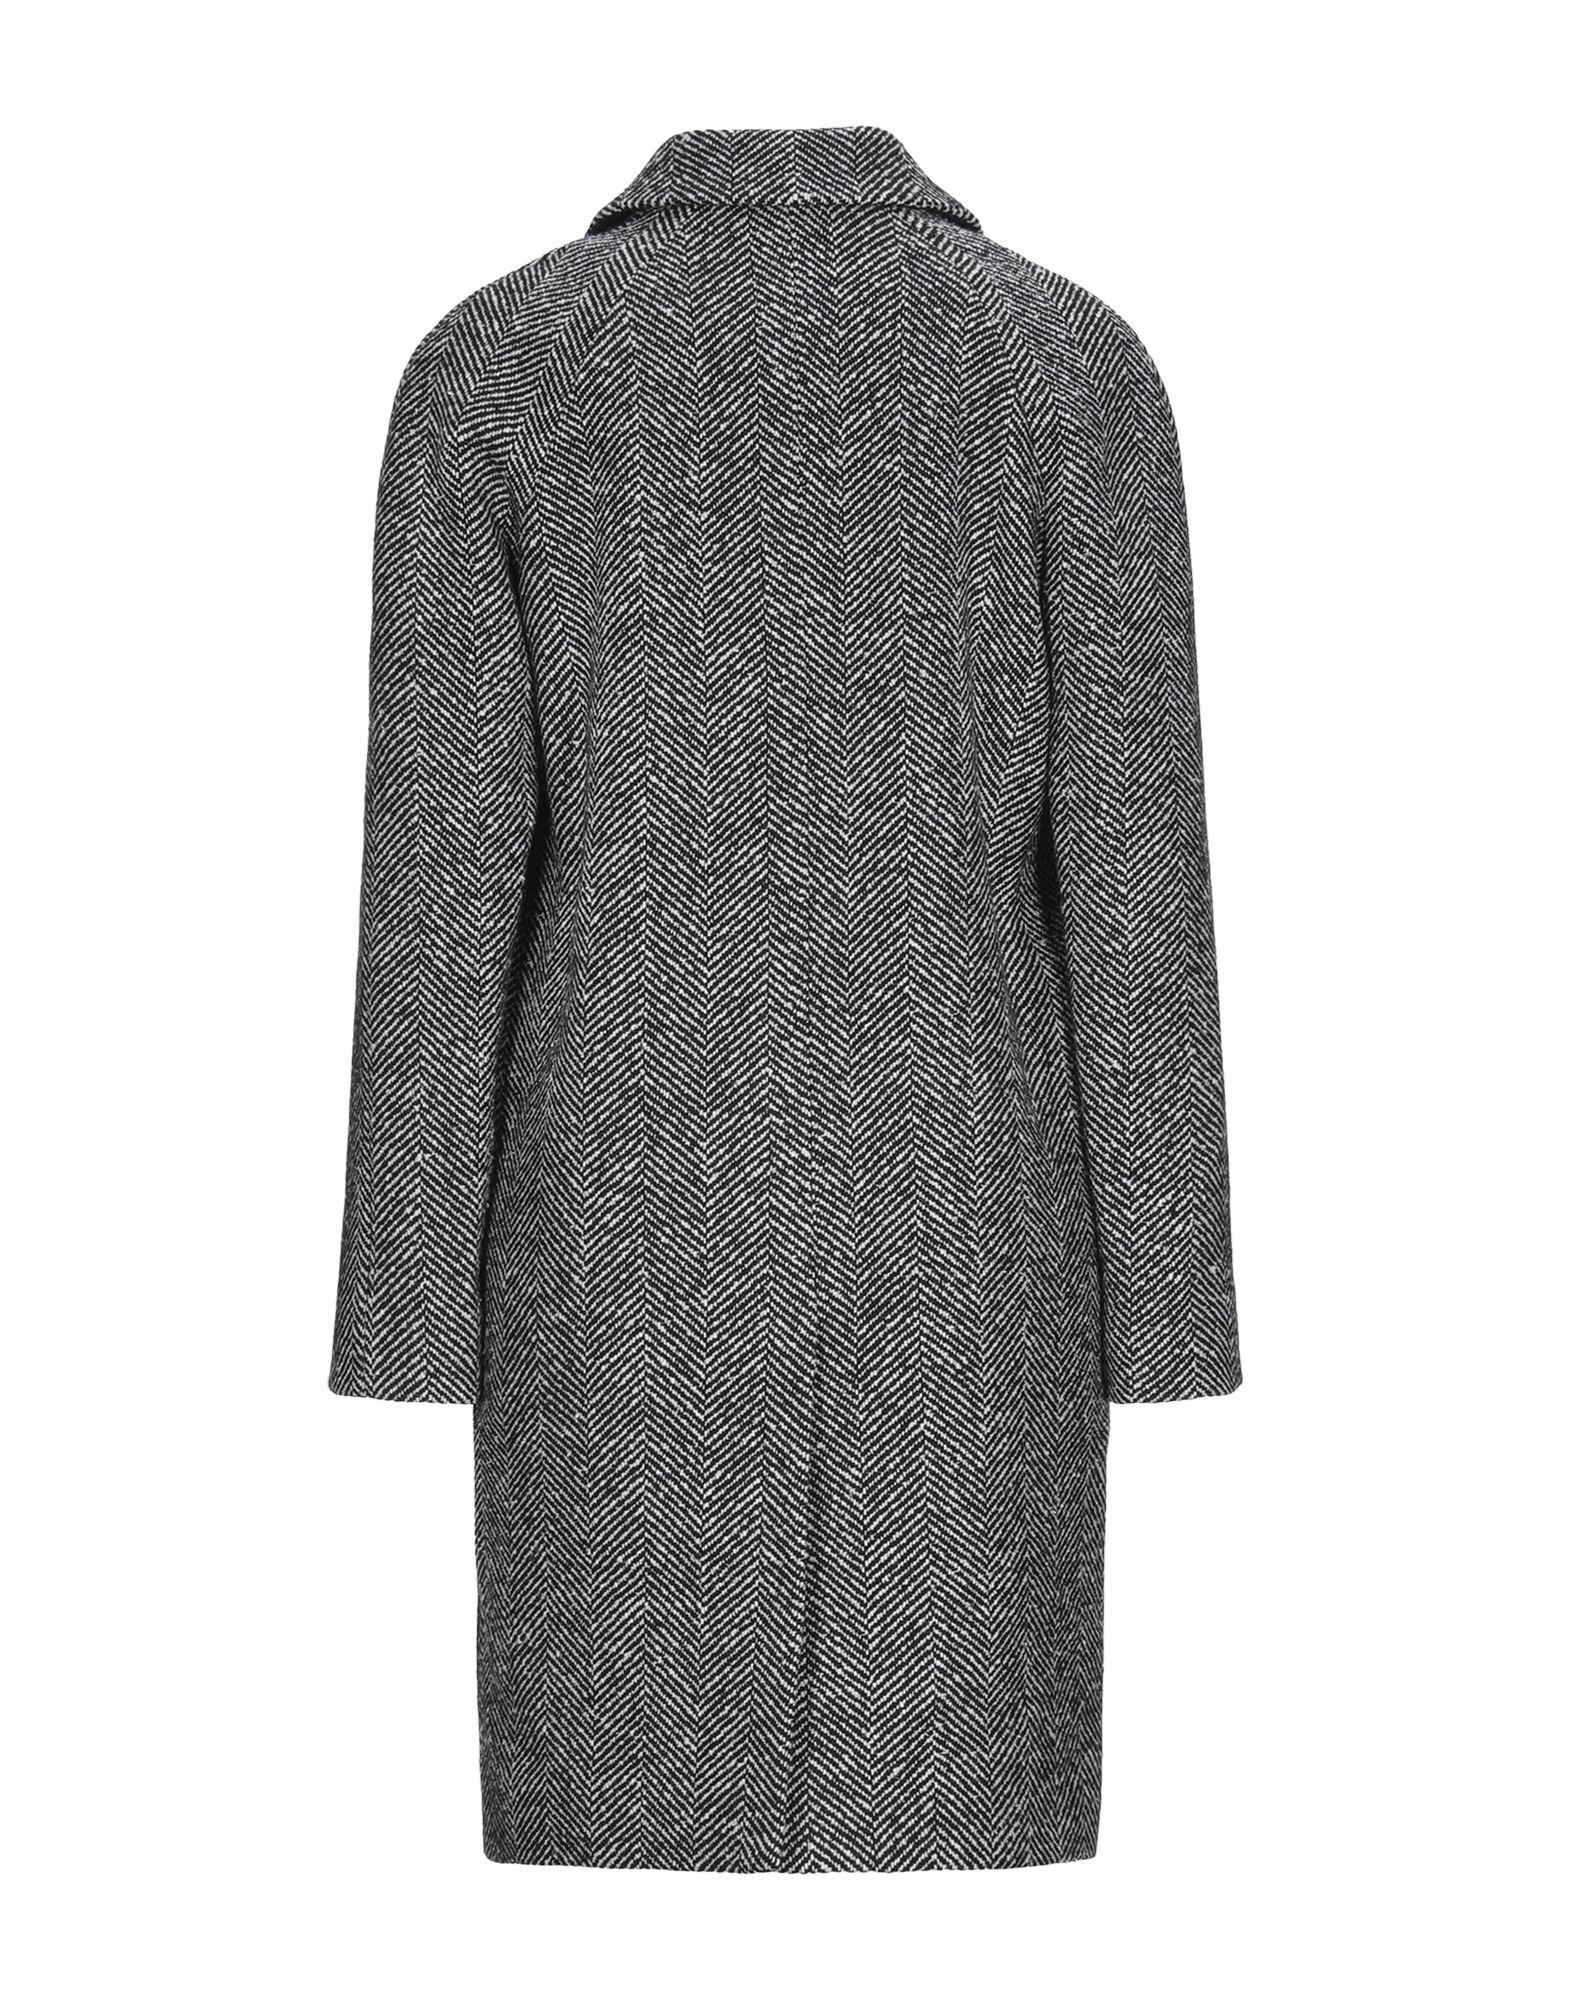 Maje Tweed Coat in Black - Lyst